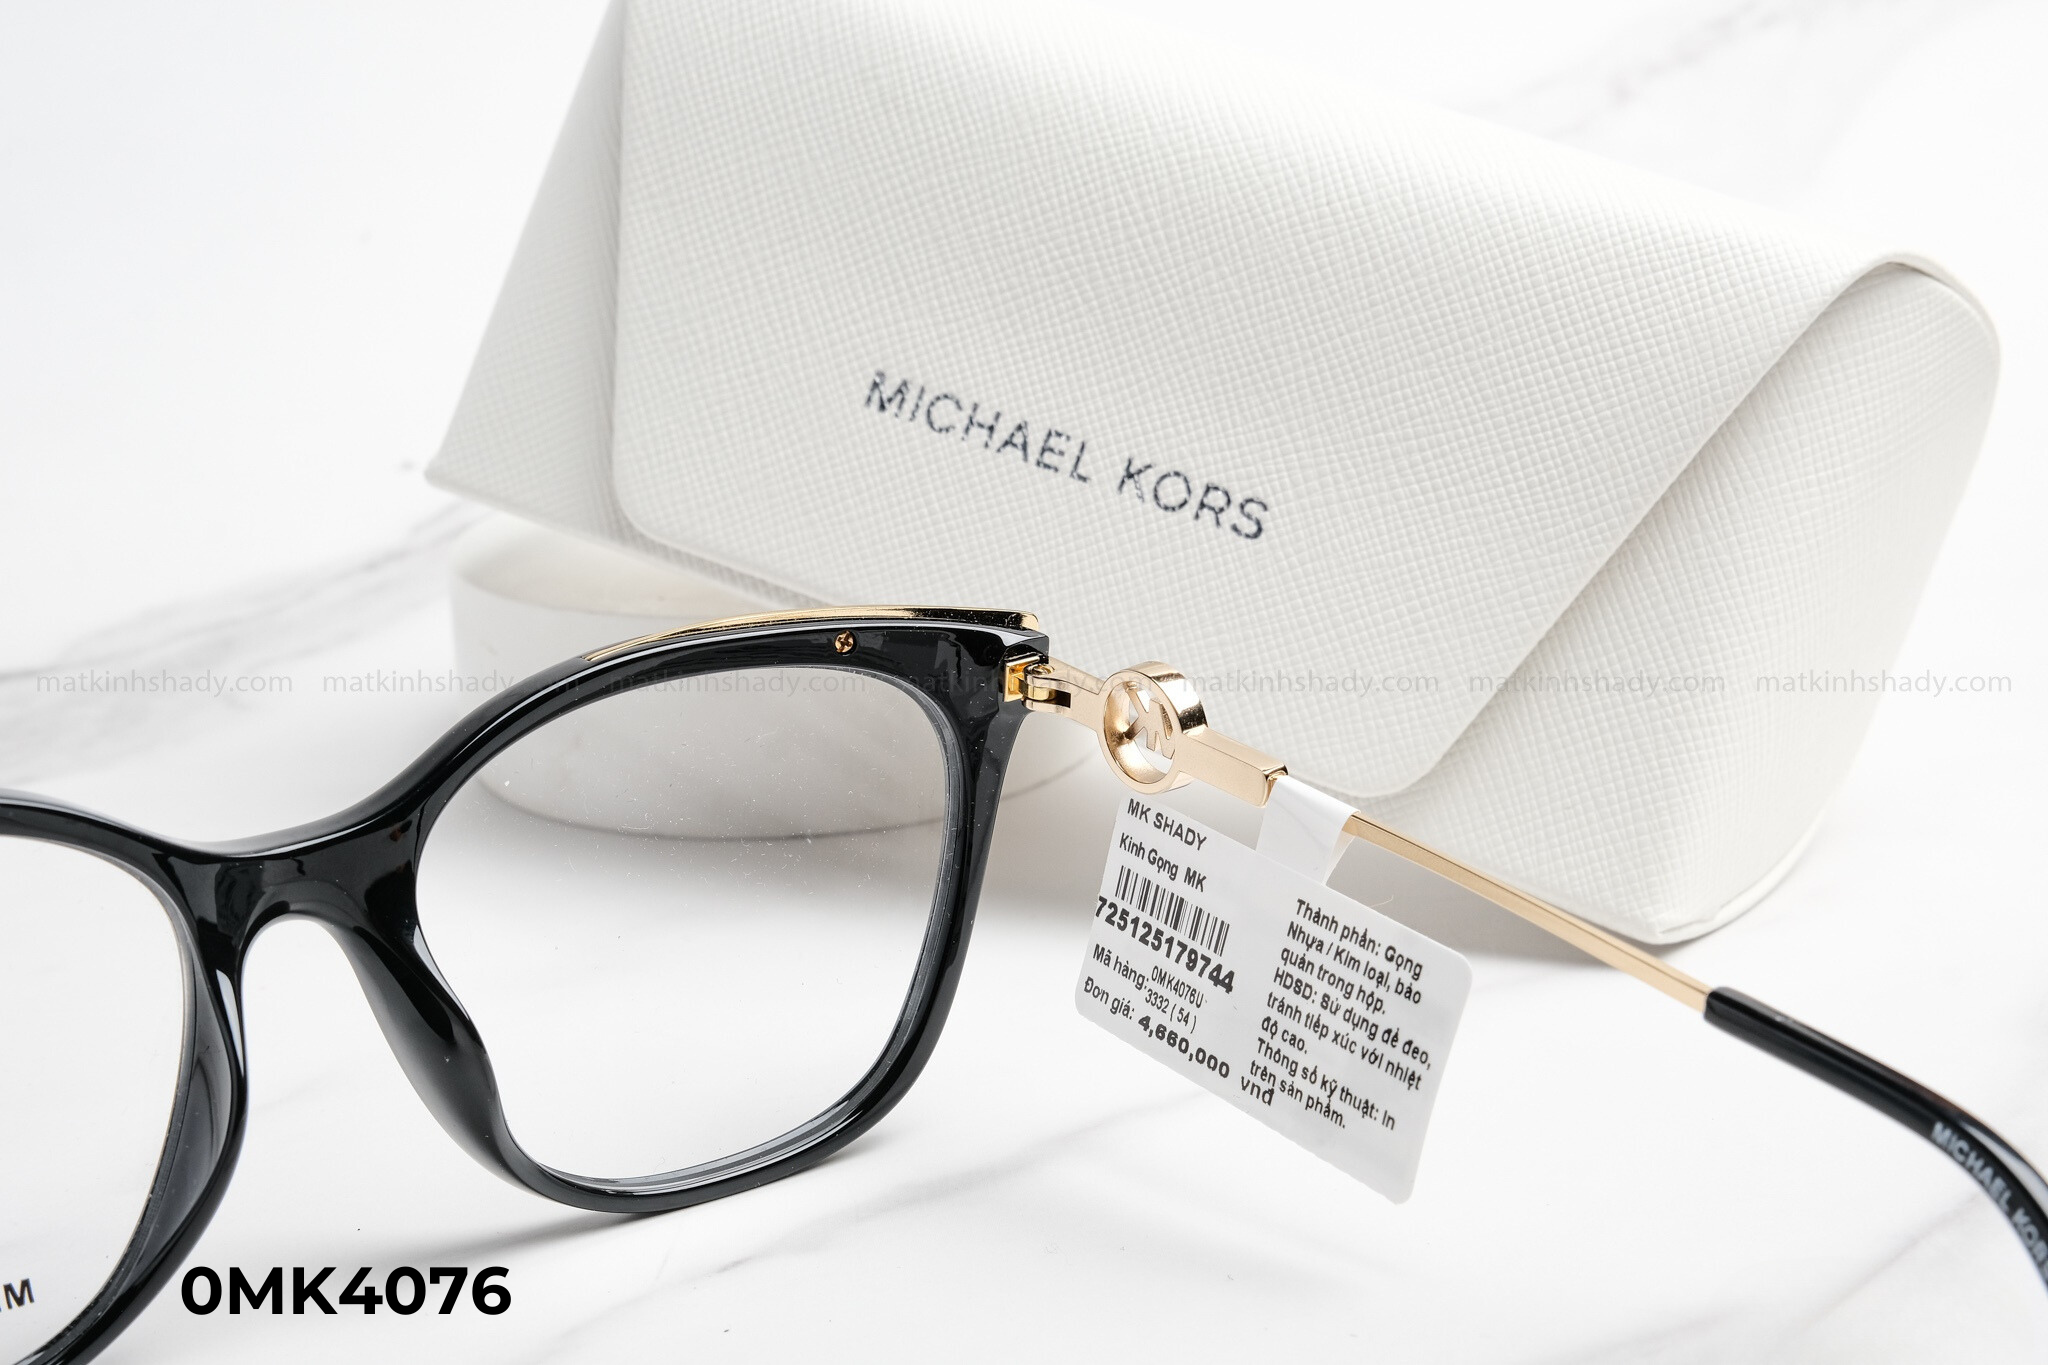  Michael Kors Eyewear - Glasses - 0MK4076 